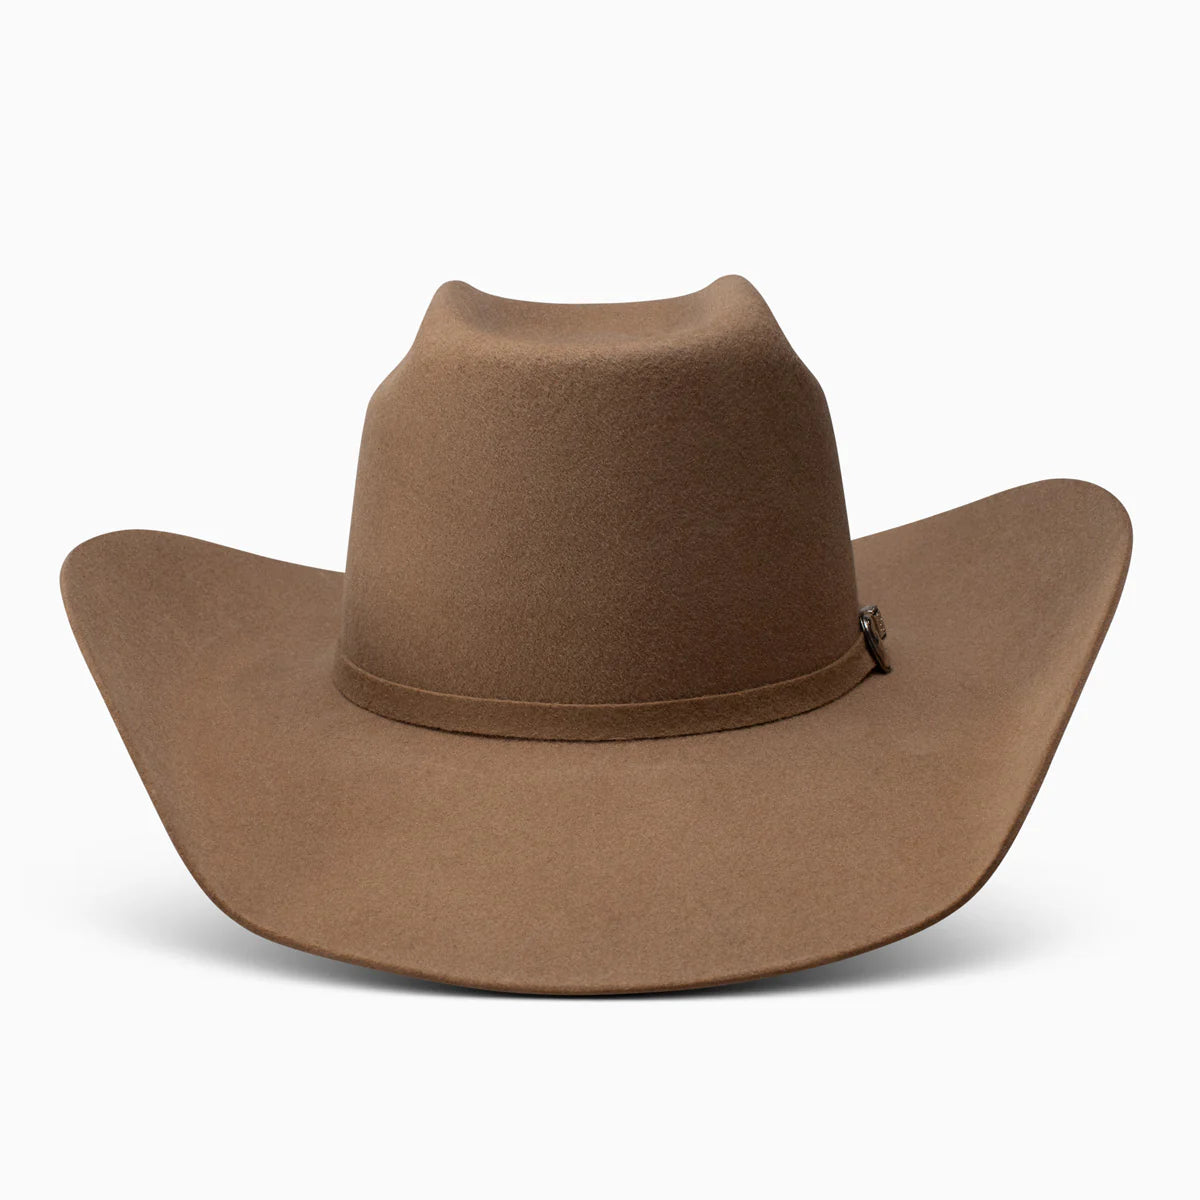 Cody Johnson by Resistol Youth Pennington Jr Felt Cowboy Hat in Pecan